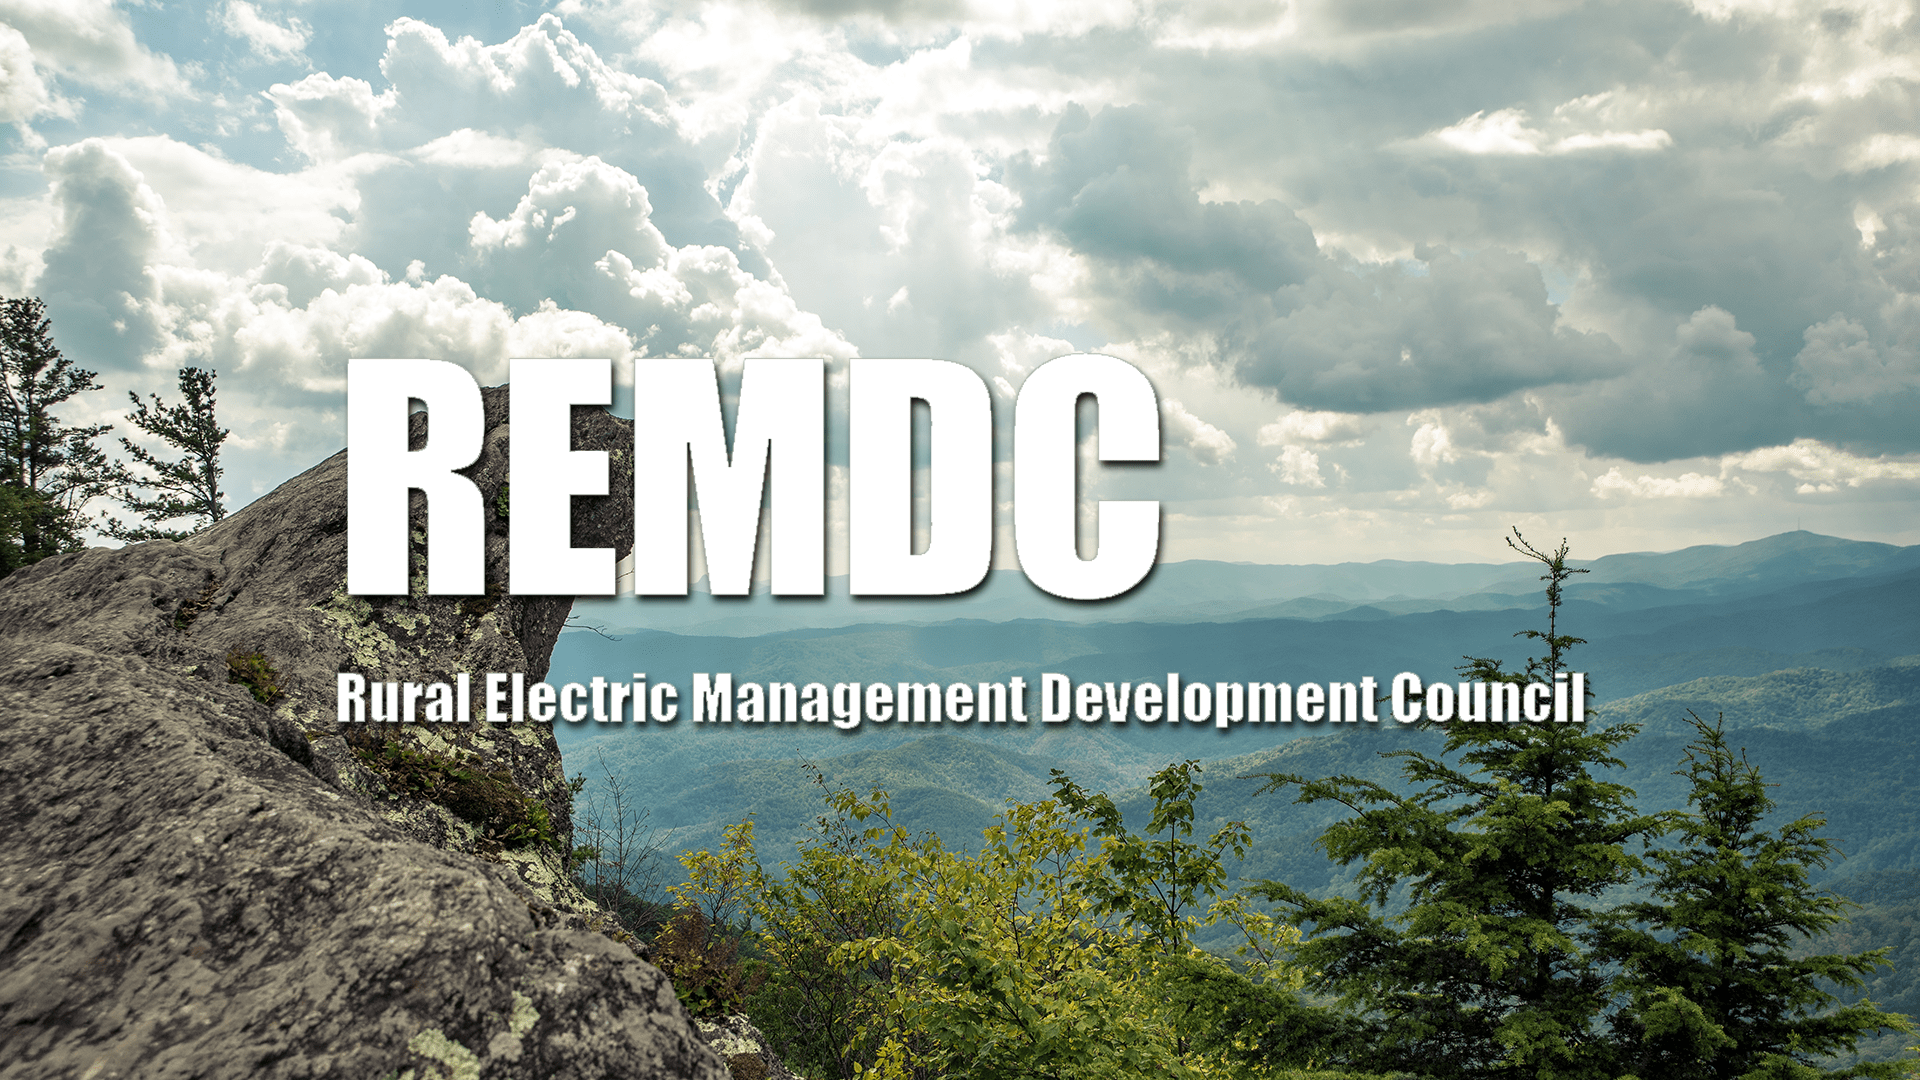 Rural Electric Management Development Council (REMDC) Annual Meeting